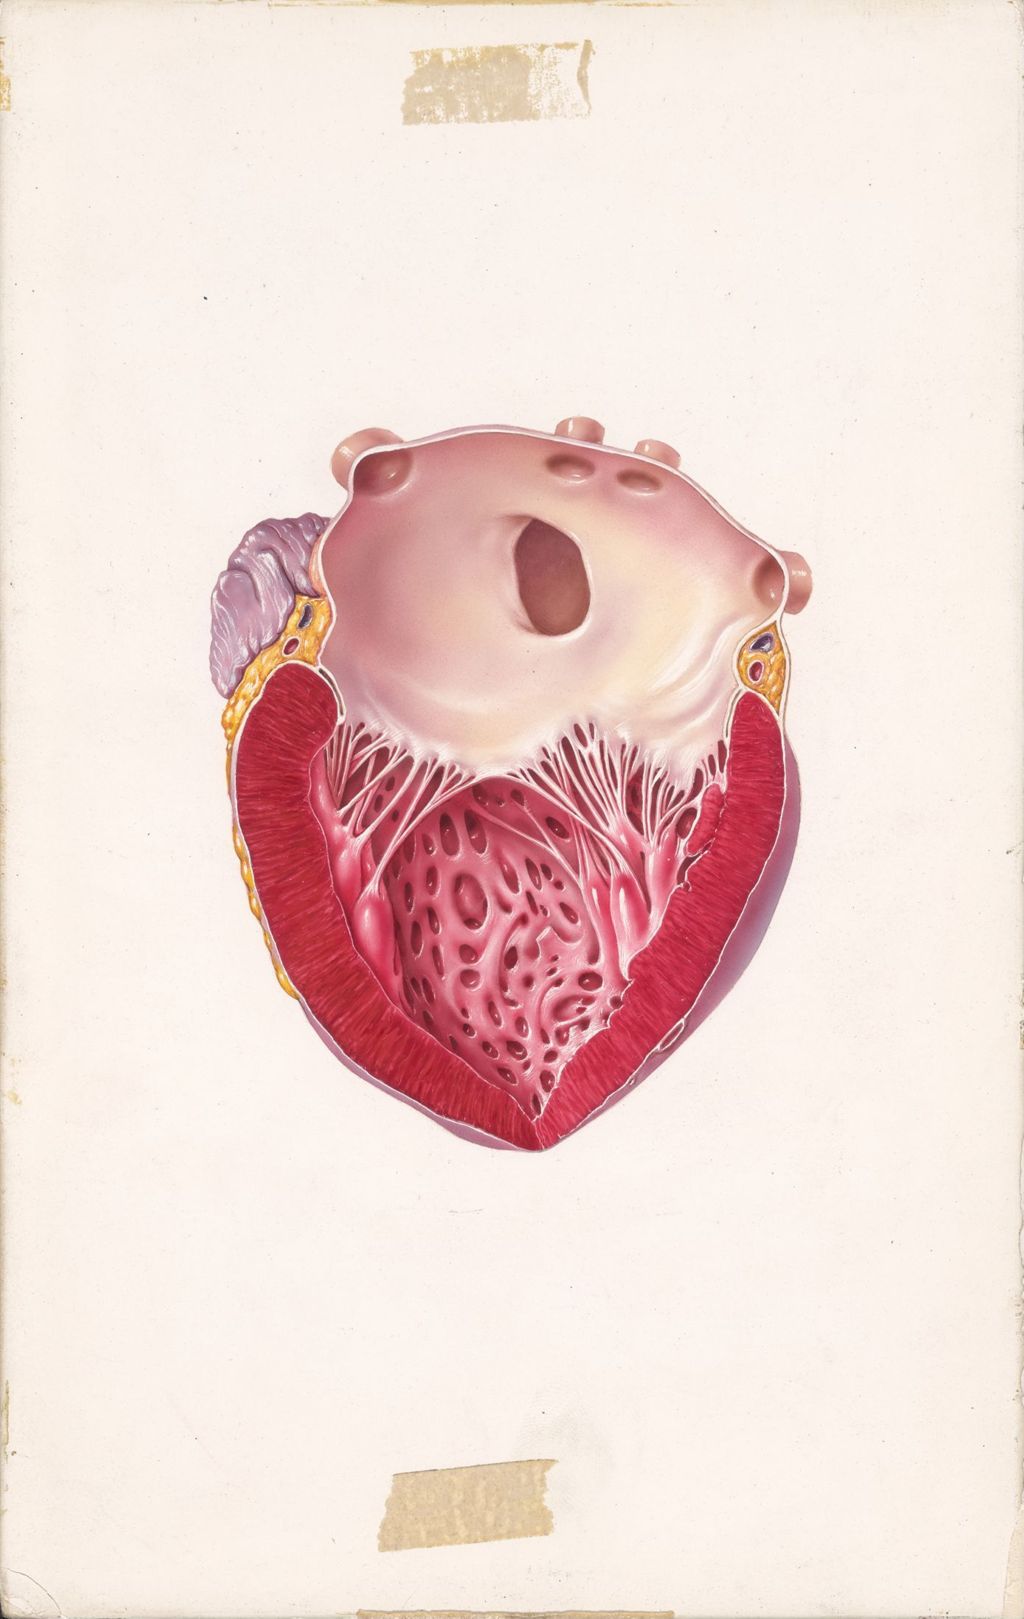 Edema of cardiac origin, Diuril-Hydrodiuril, Atrial-septal defect